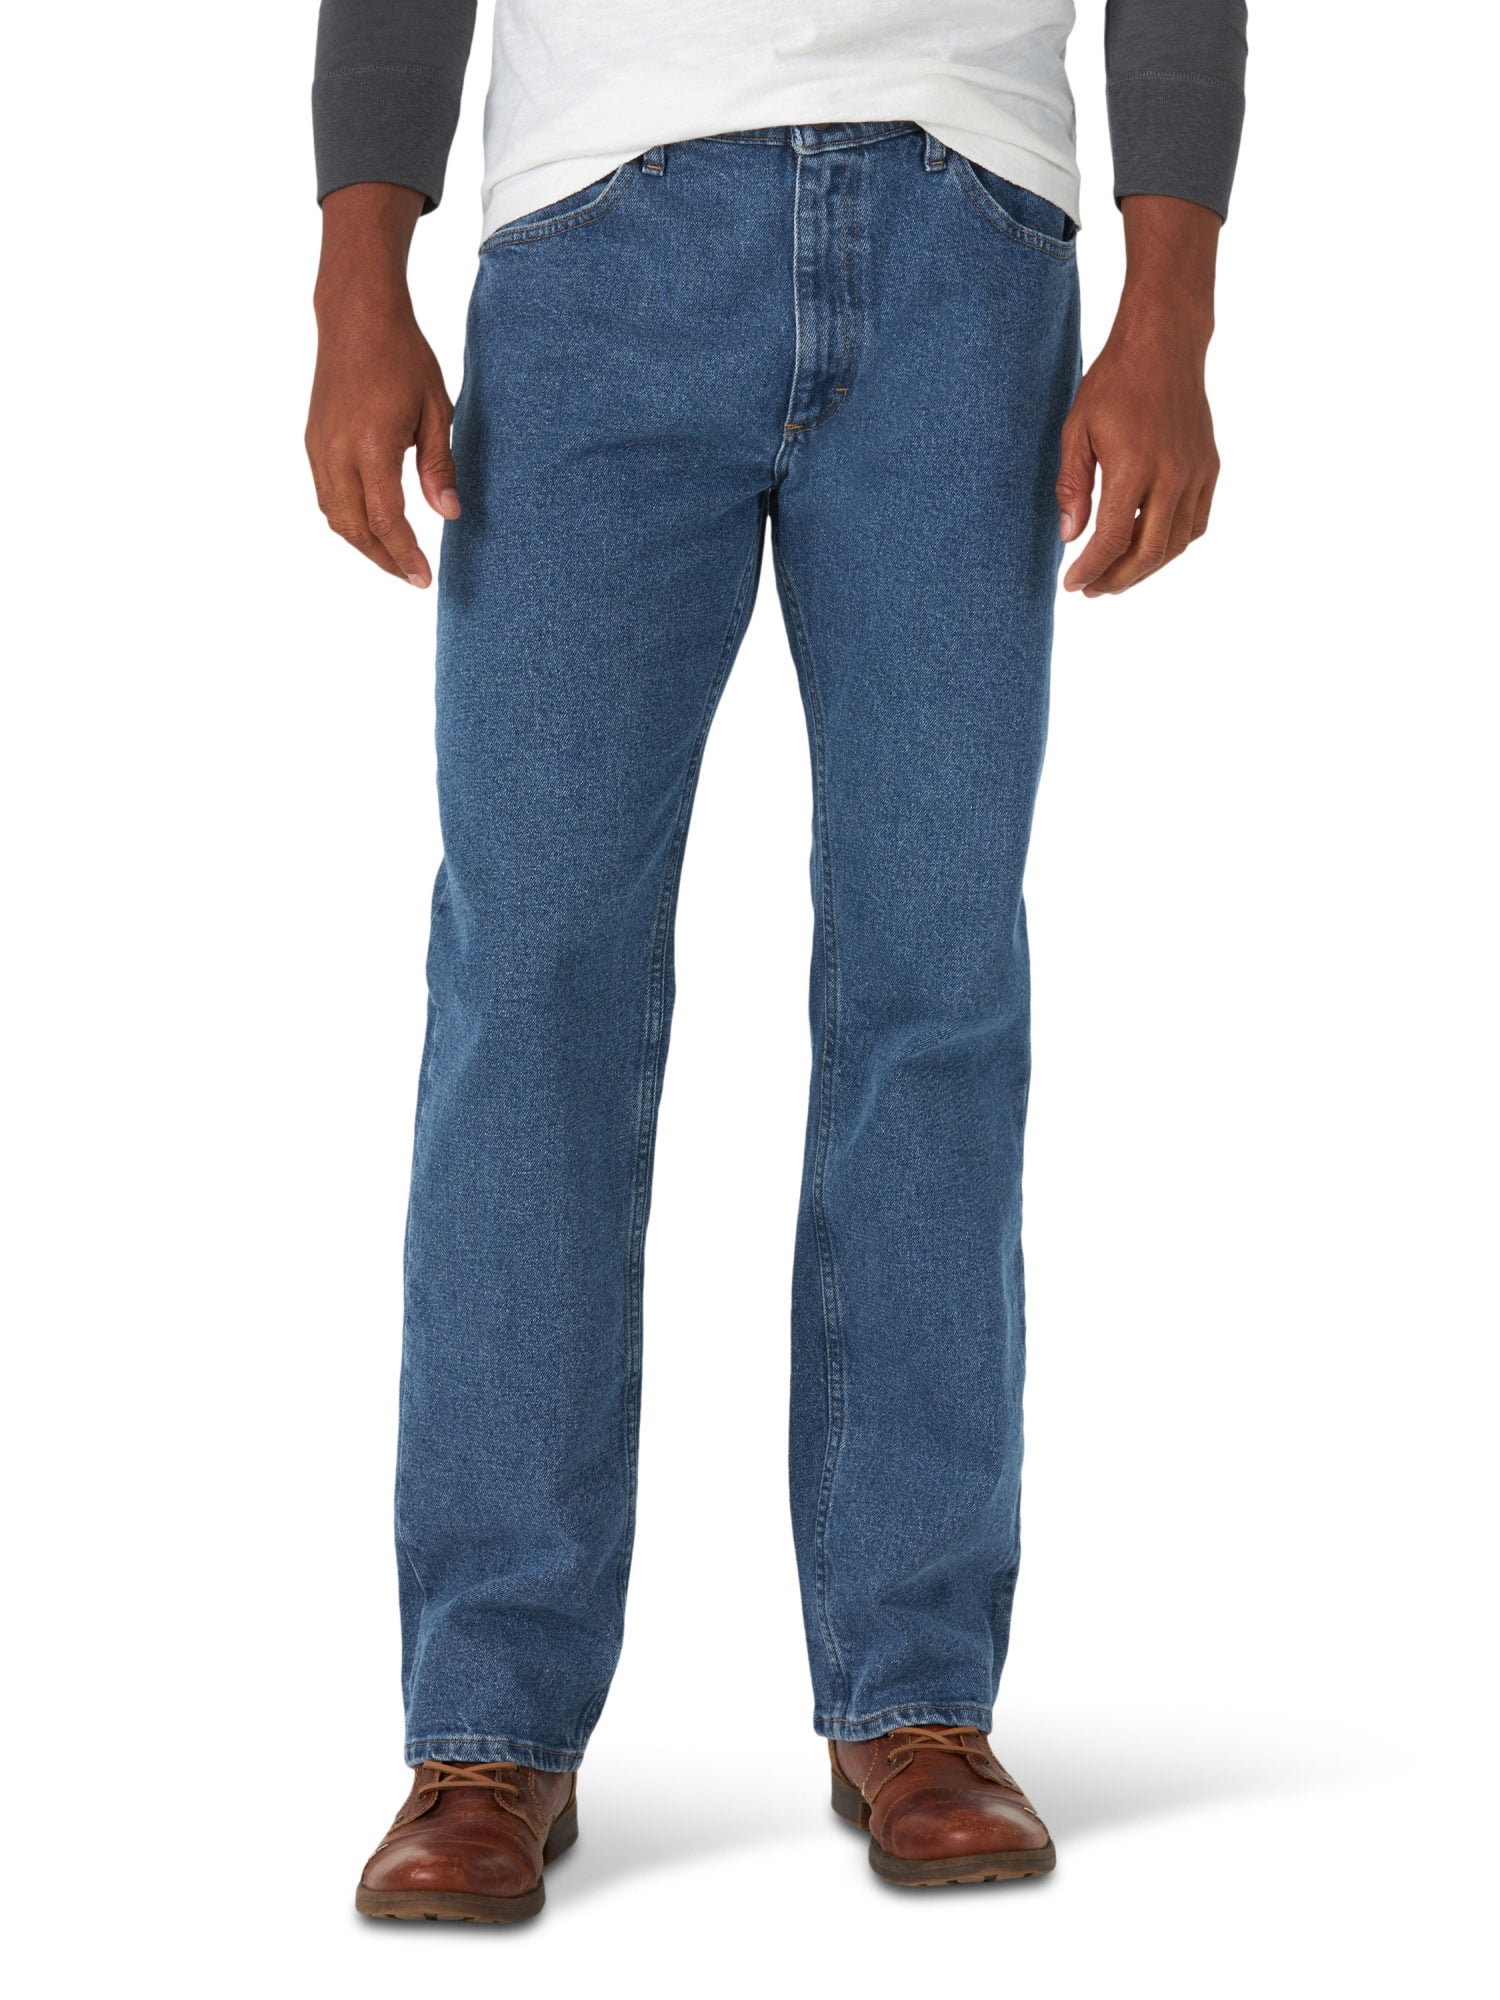 Wrangler Men's Big Men's Fit Jeans with Flex - Walmart.com